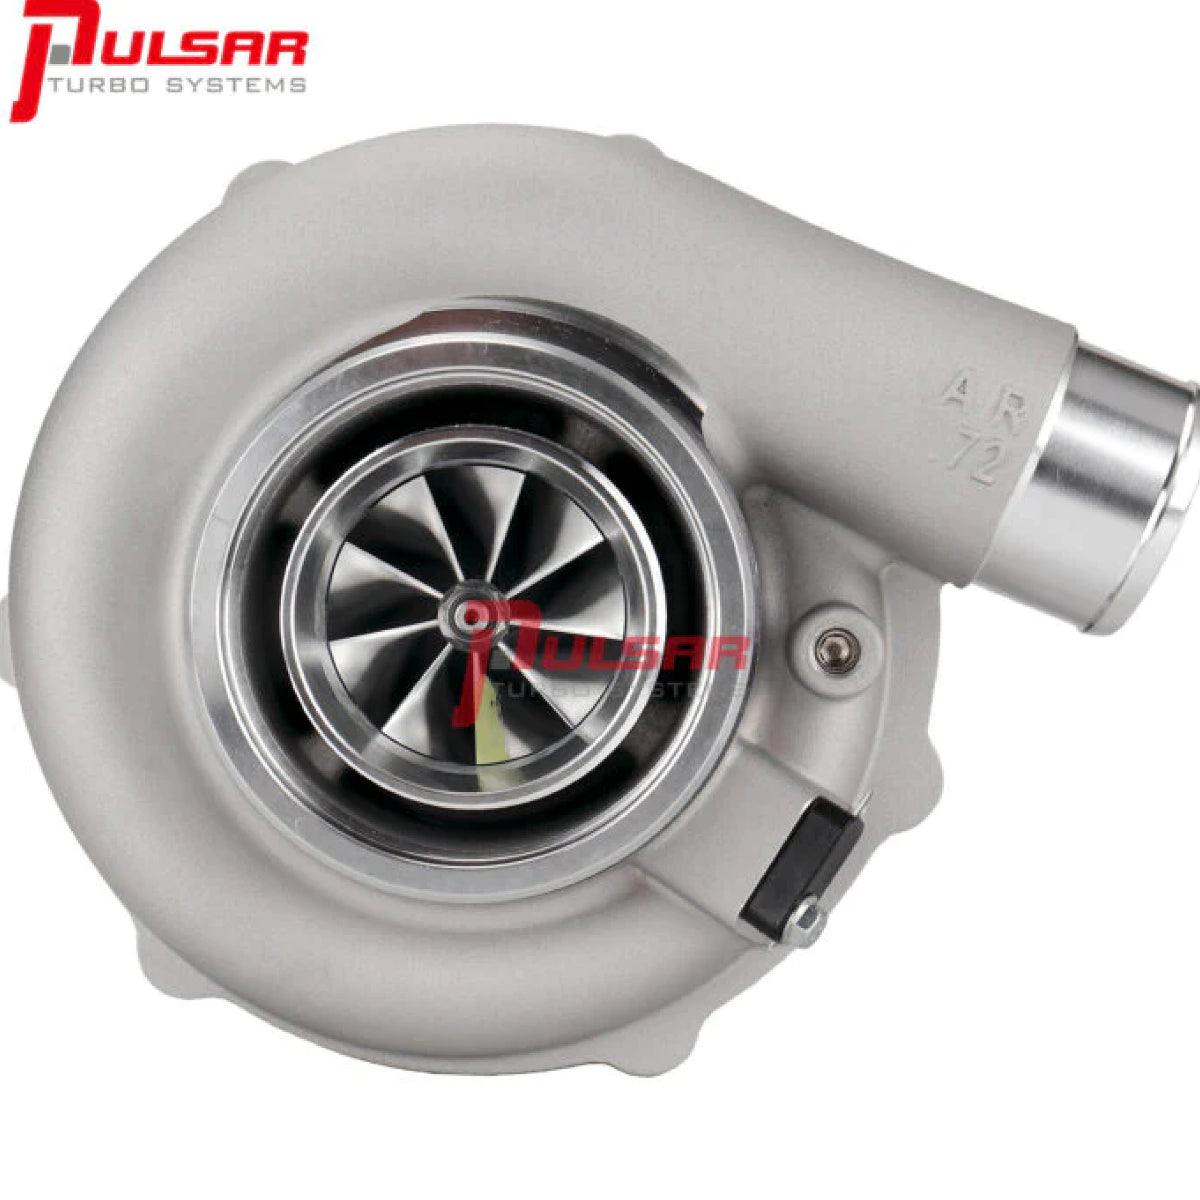 PULSAR 5855G PTG30 770HP 58mm Dual Ball Bearing TurboProlink Performance